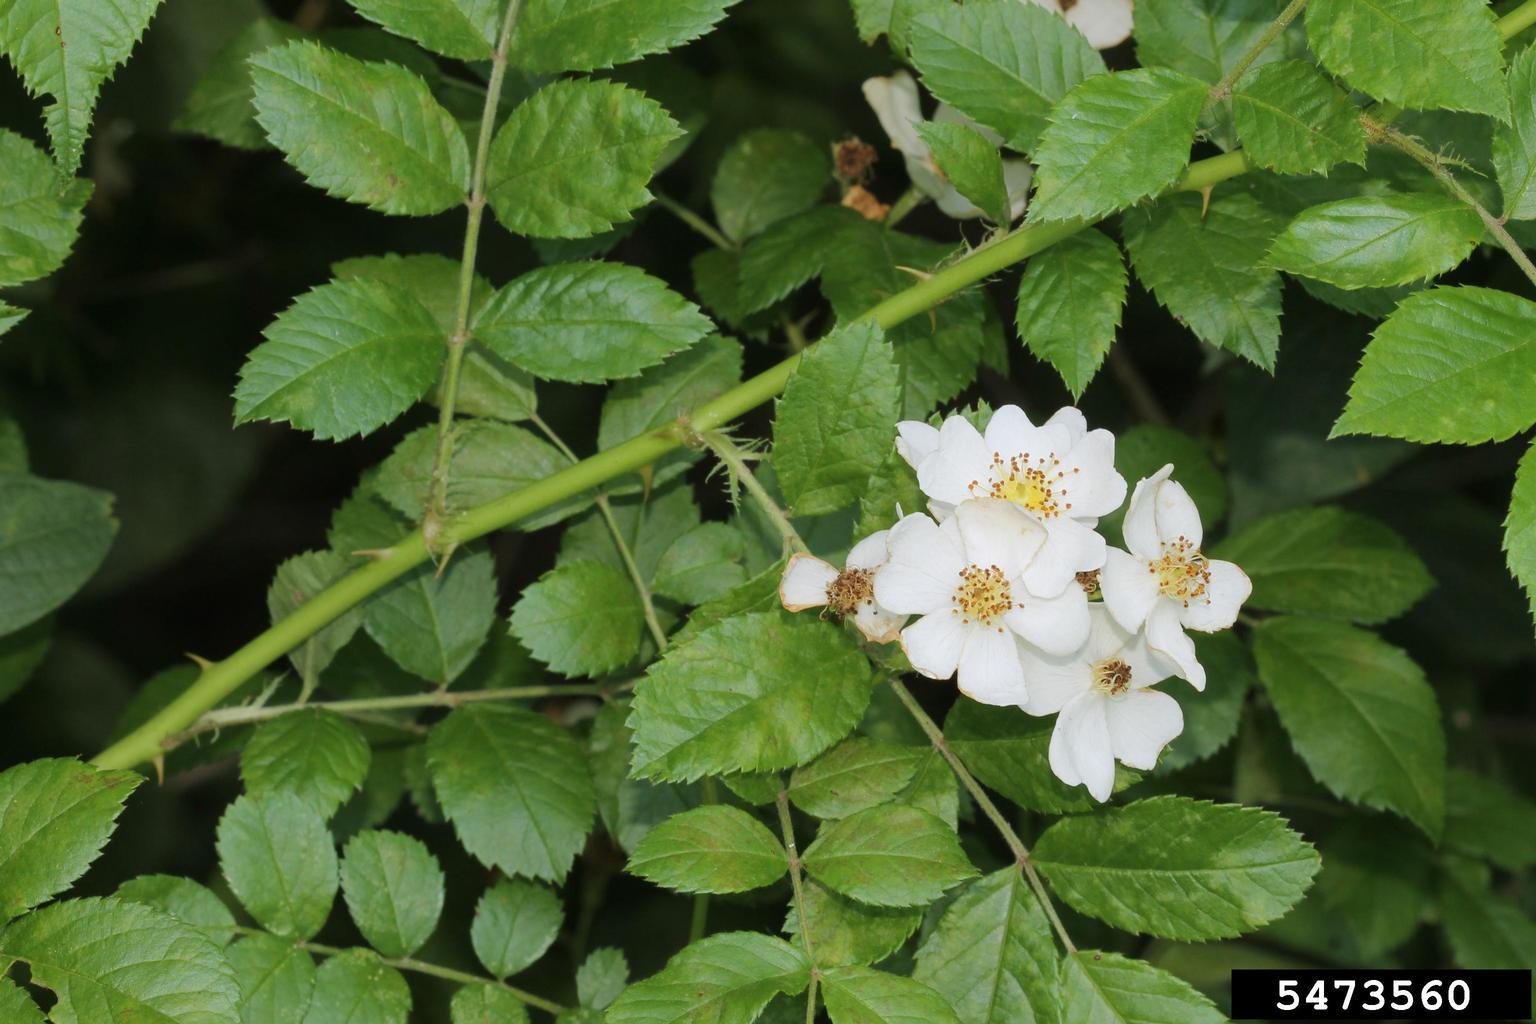 invasive multiflora rose shrub with white flowers